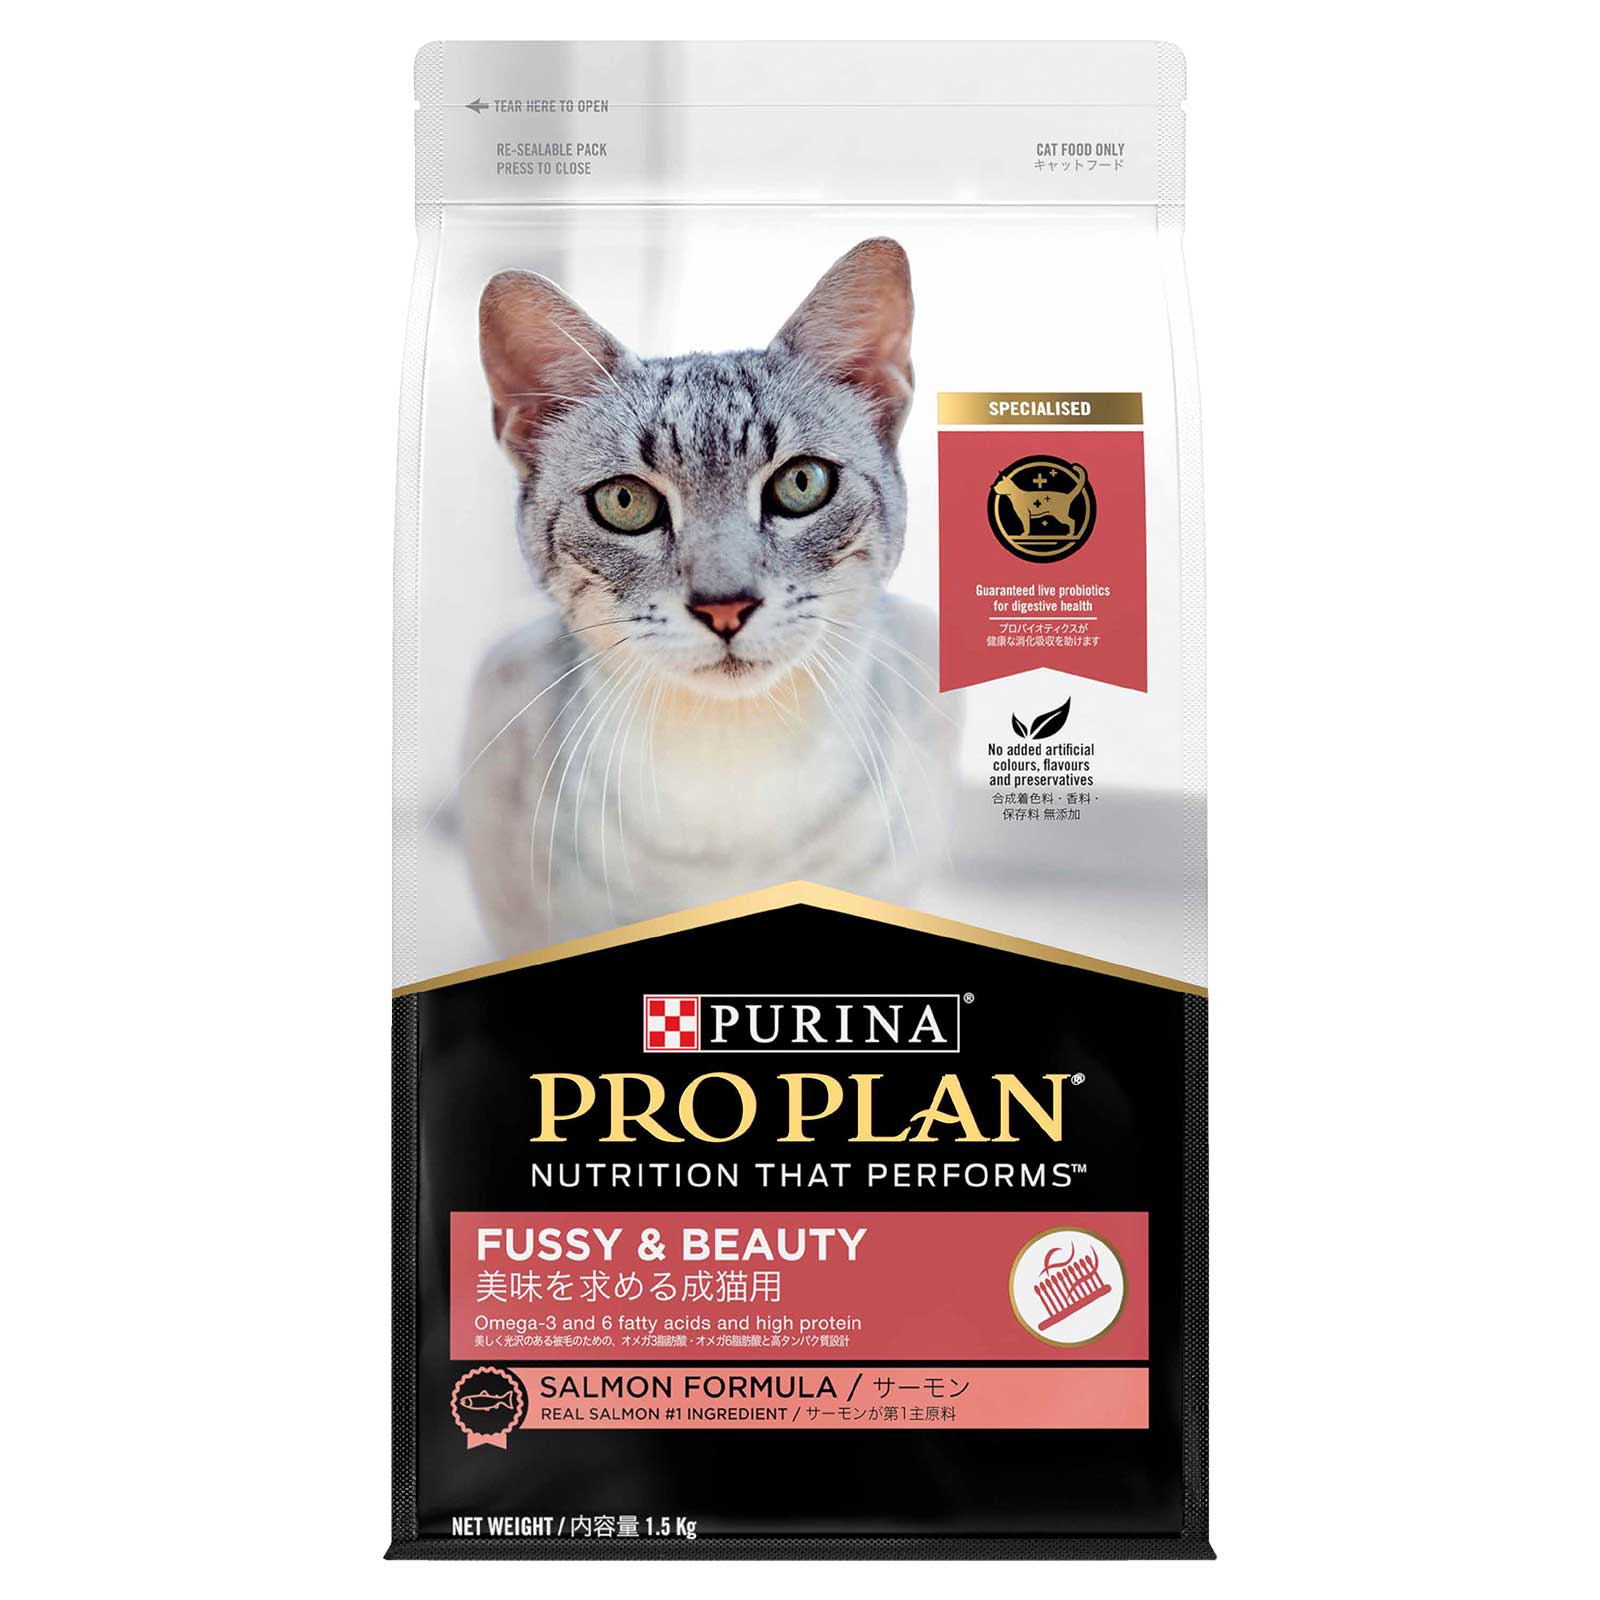 Pro Plan Cat Food Adult Fussy & Beauty Salmon